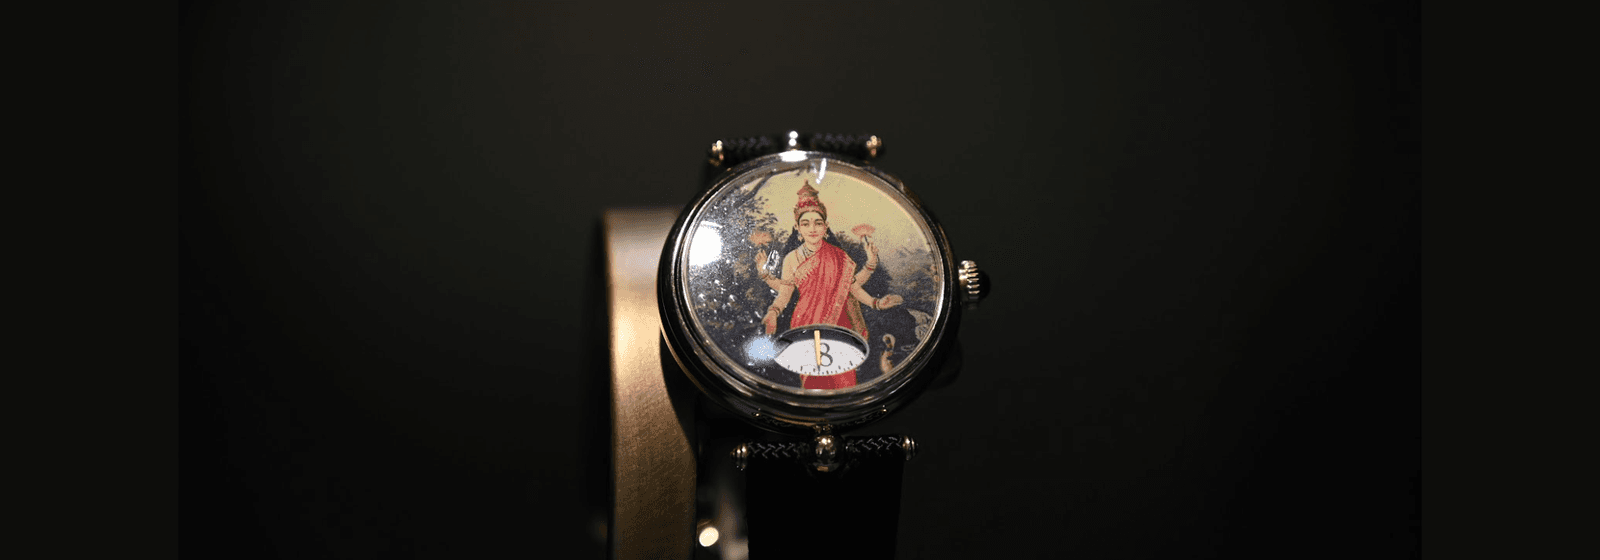 Jaipur Watch Company Keeps The Art Of Raja Ravi Varma